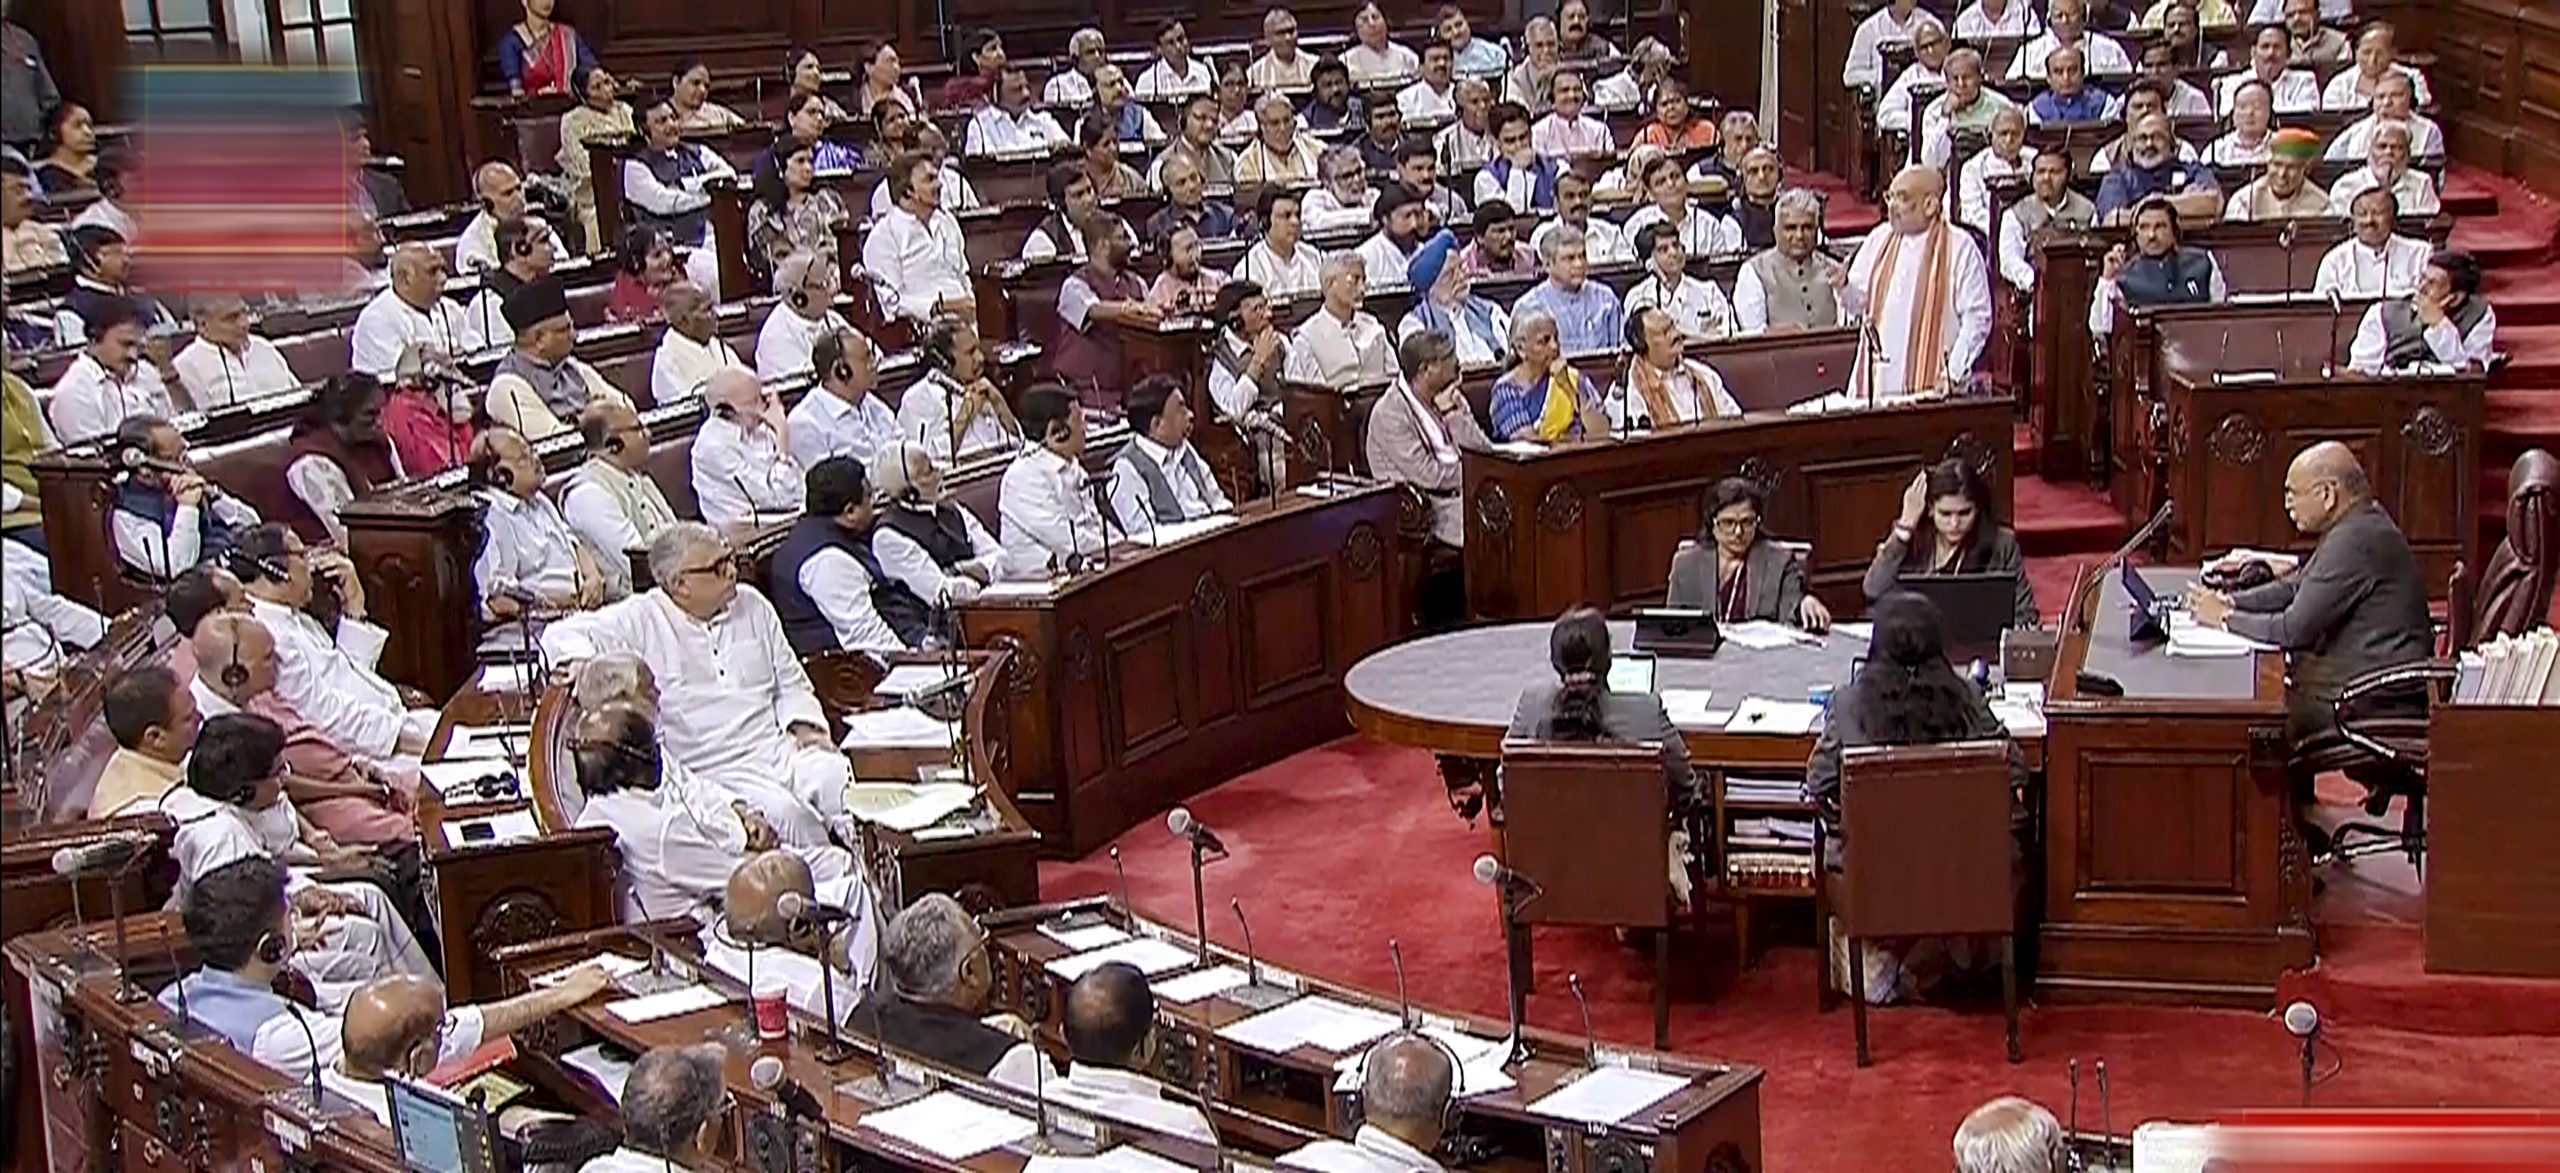 Delhi Service Bill passed in Rajya Sabha, 131 votes in favor and 102 votes against